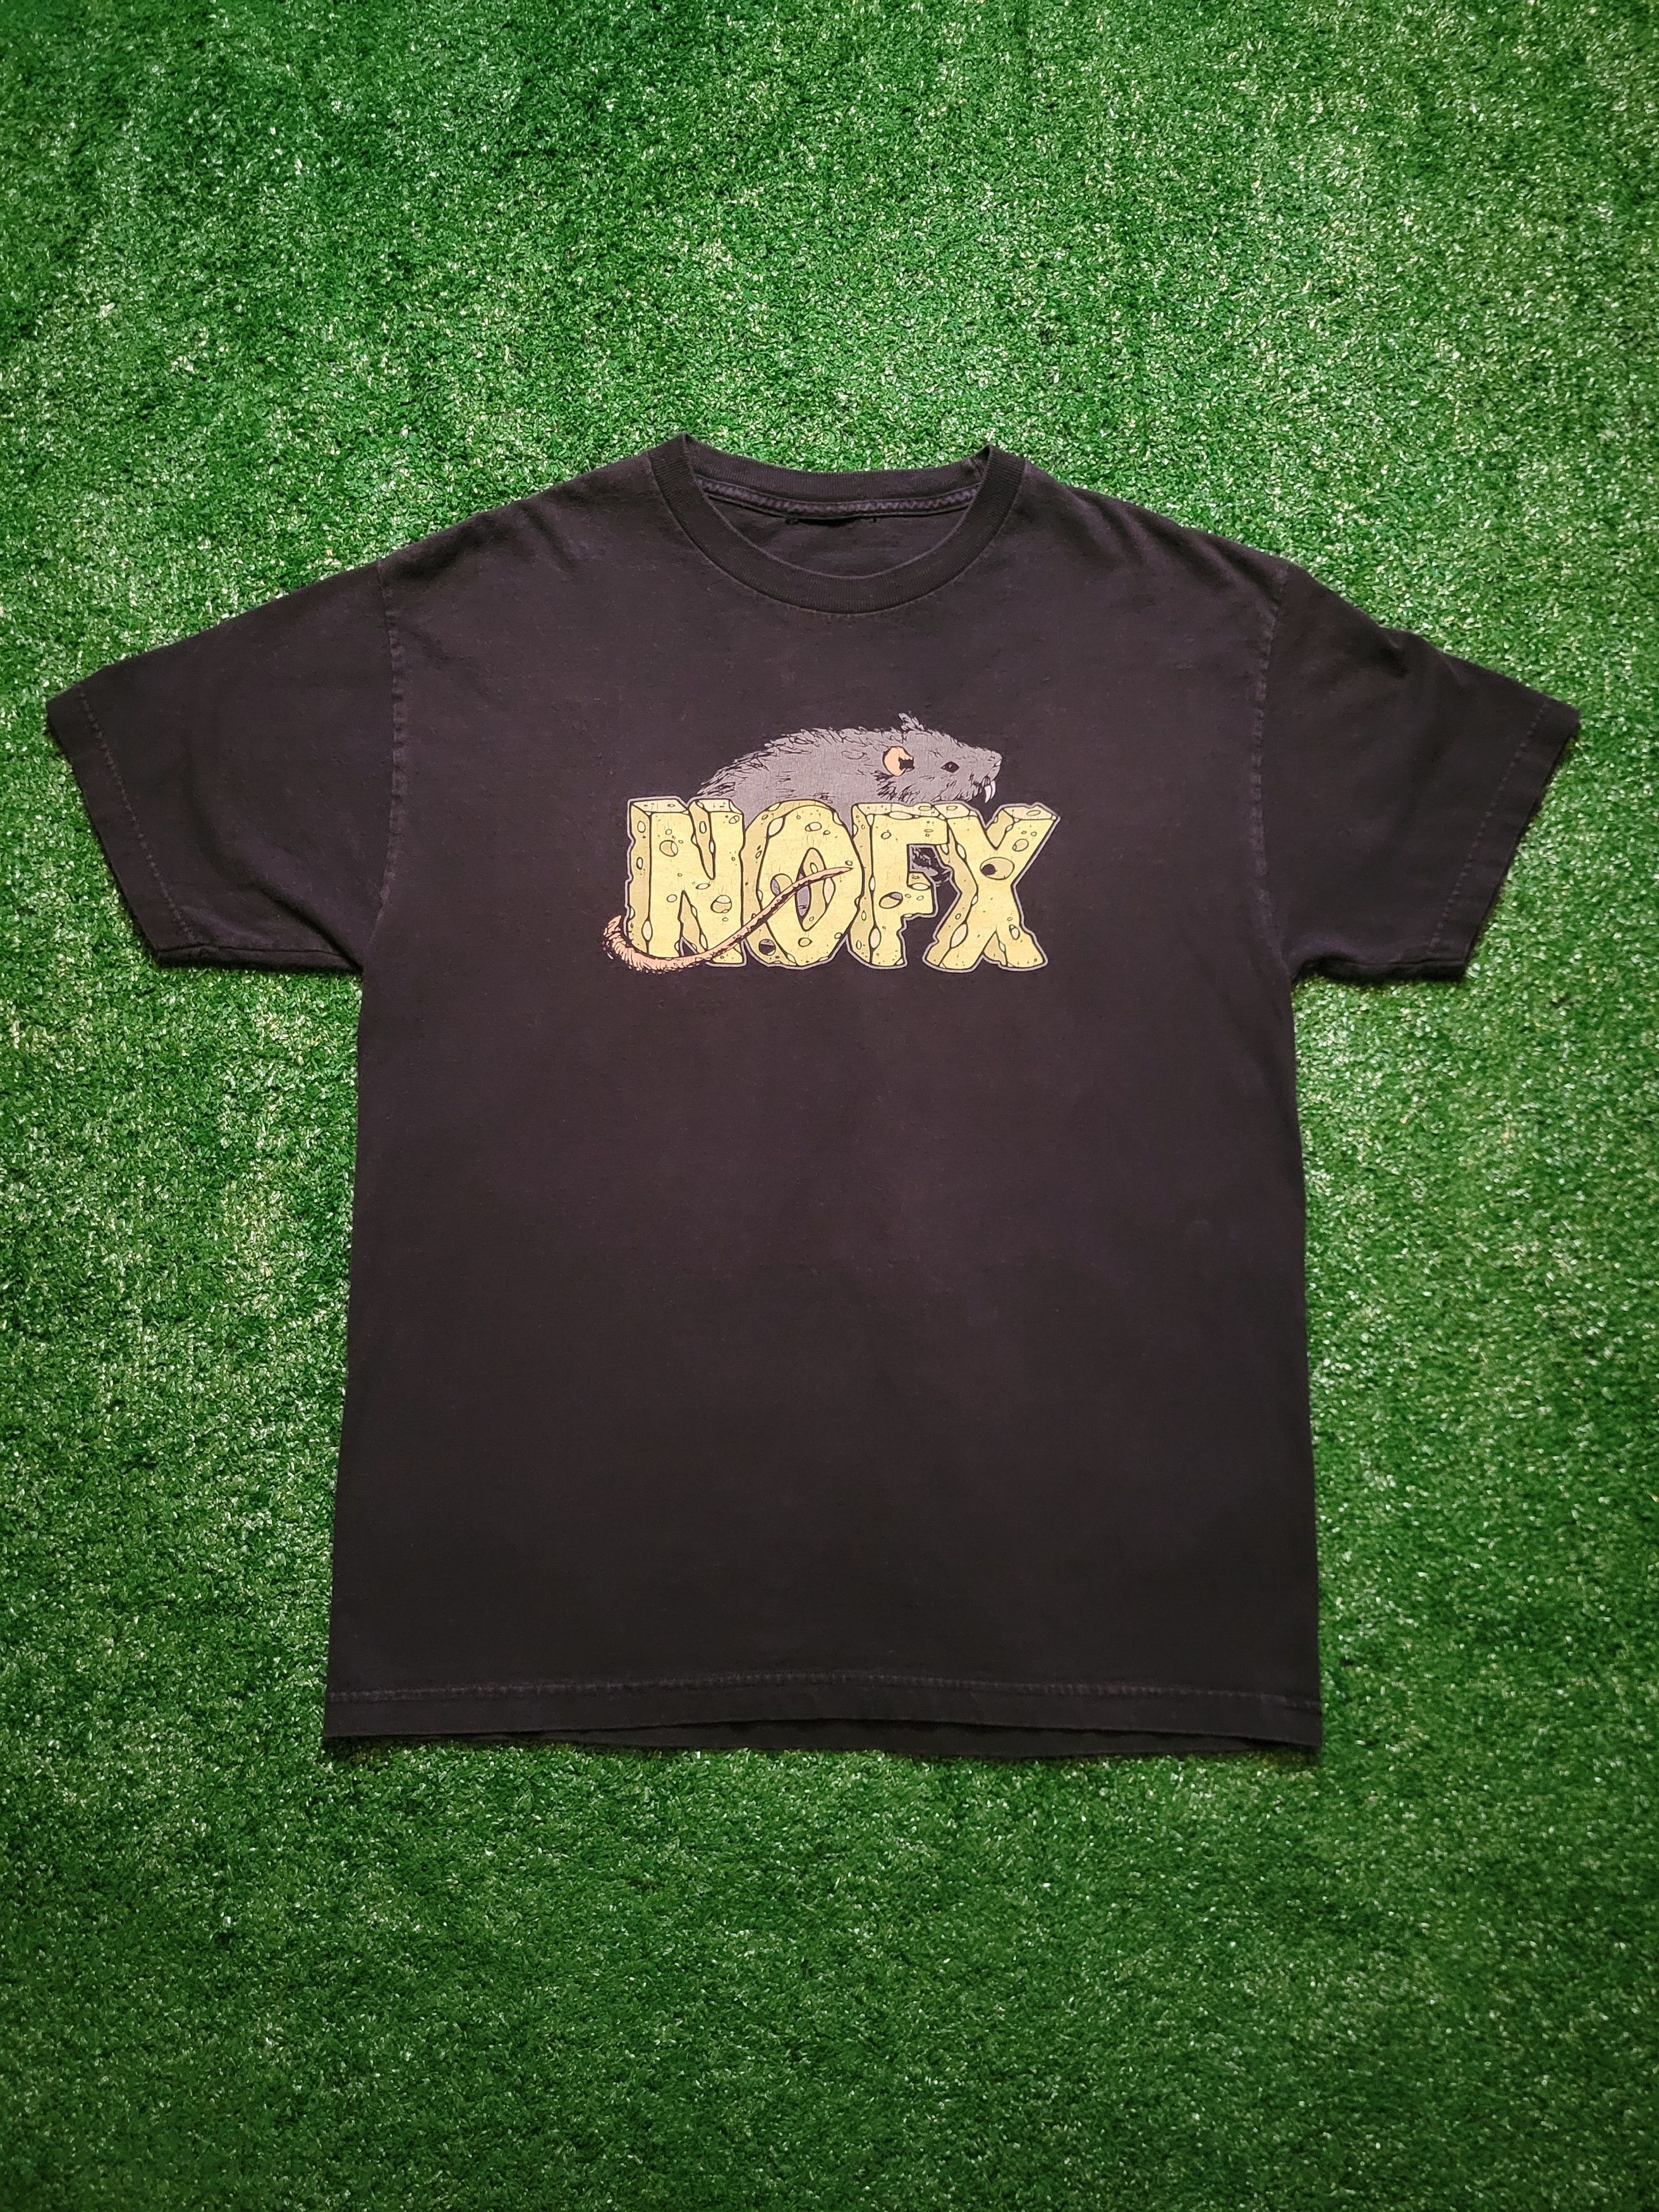 Nofx Vintage Shirt | Grailed